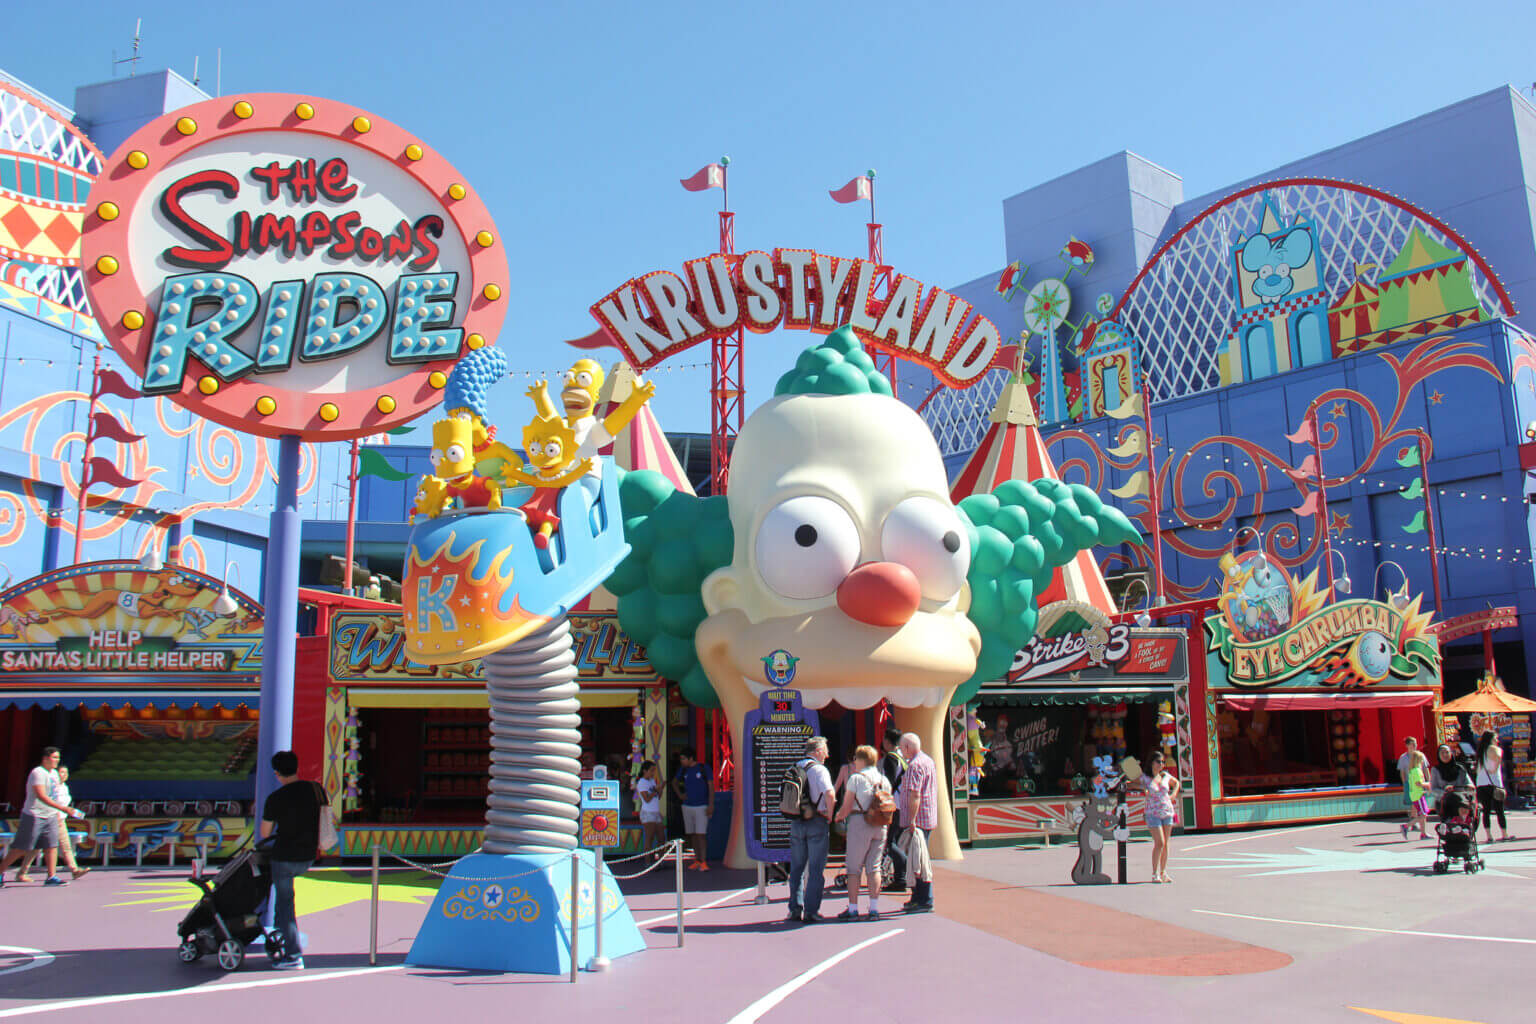 Universal Studios Orlando Rides List All Universal Studios Rides with Descriptions